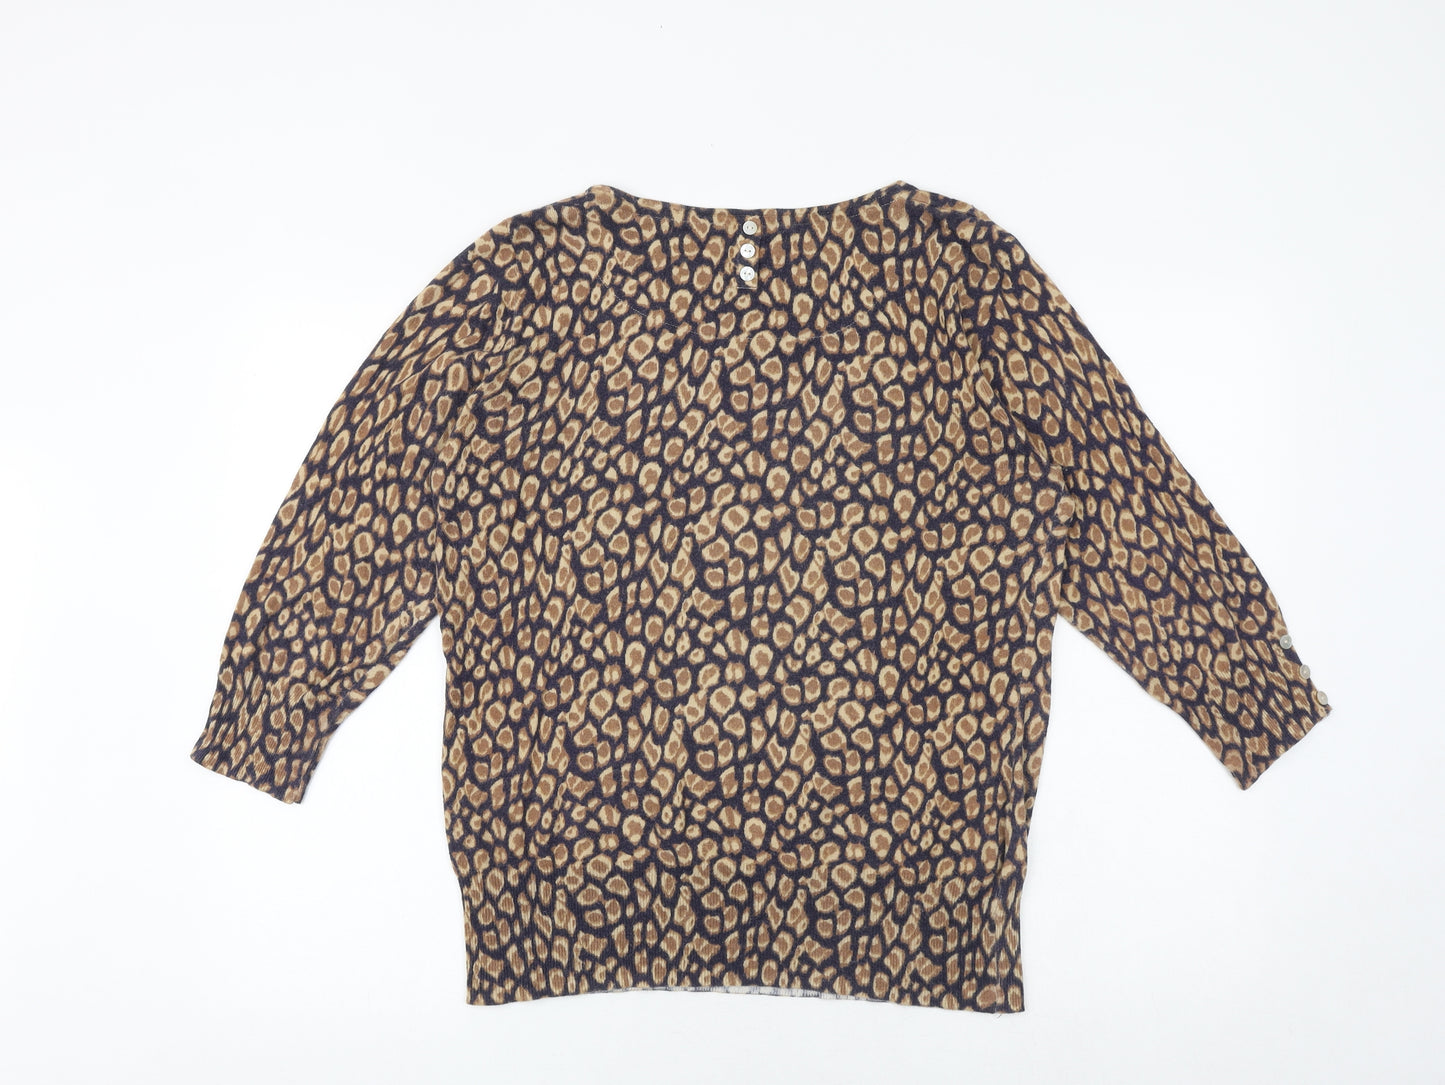 NEXT Womens Multicoloured Round Neck Animal Print Cotton Pullover Jumper Size 16 - Leopard Print